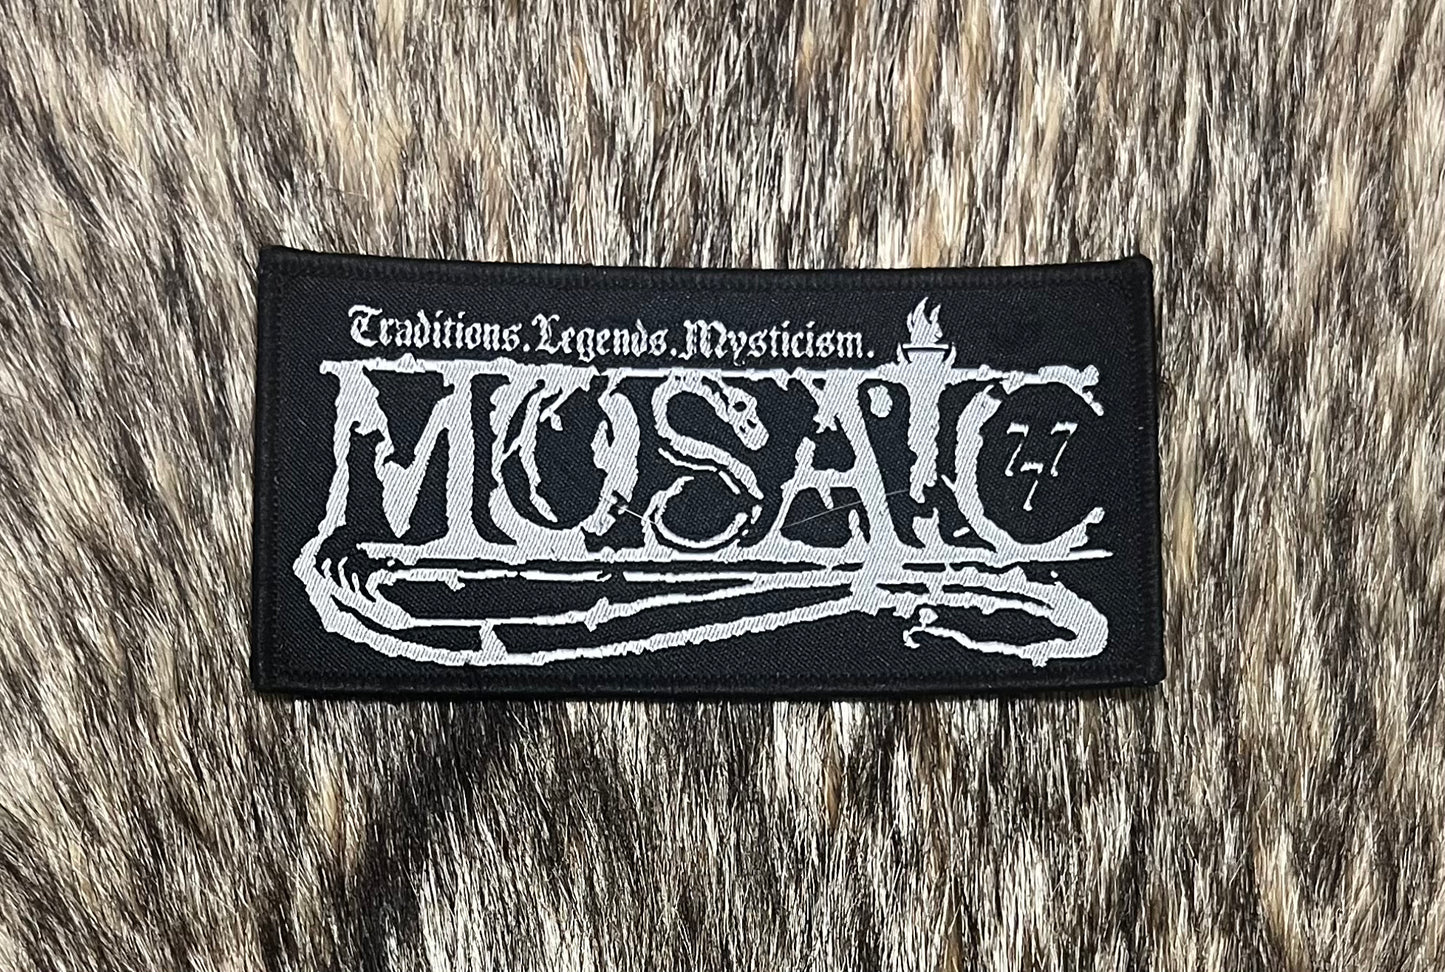 Mosaic - Traditions, Legends, Mysticism Logo